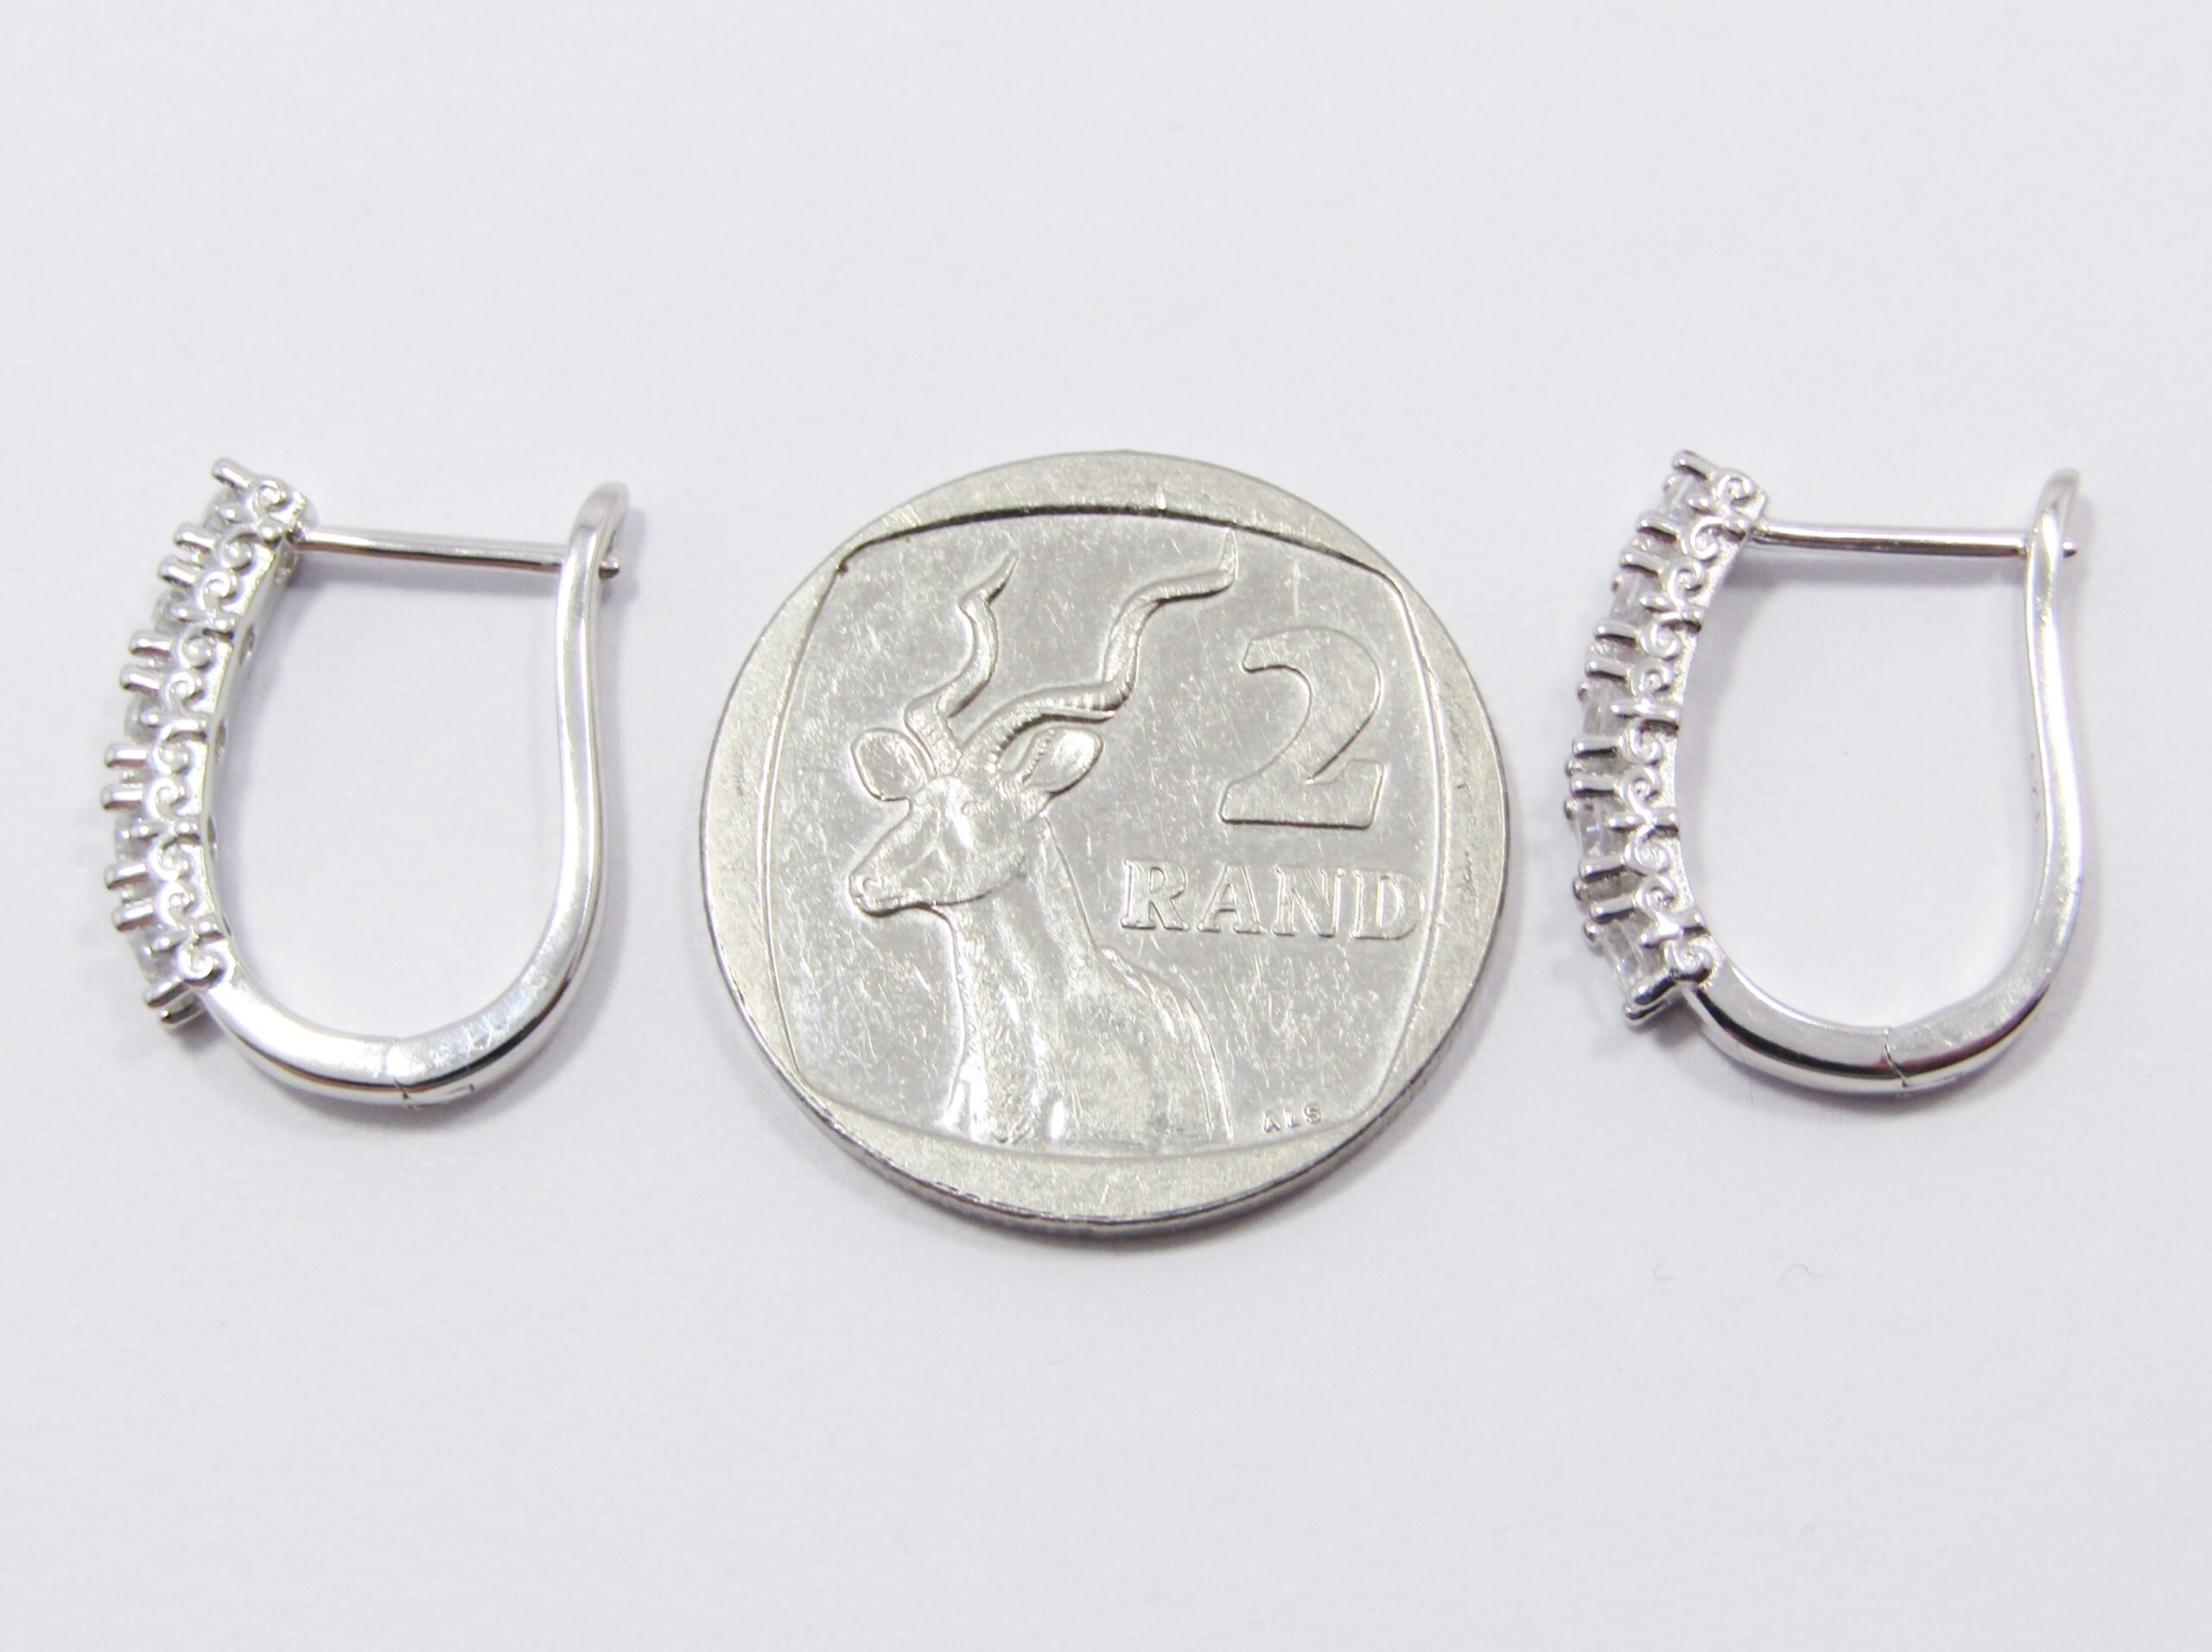 A Lovely Pair of Zirconia Stud Earrings in Sterling Silver.